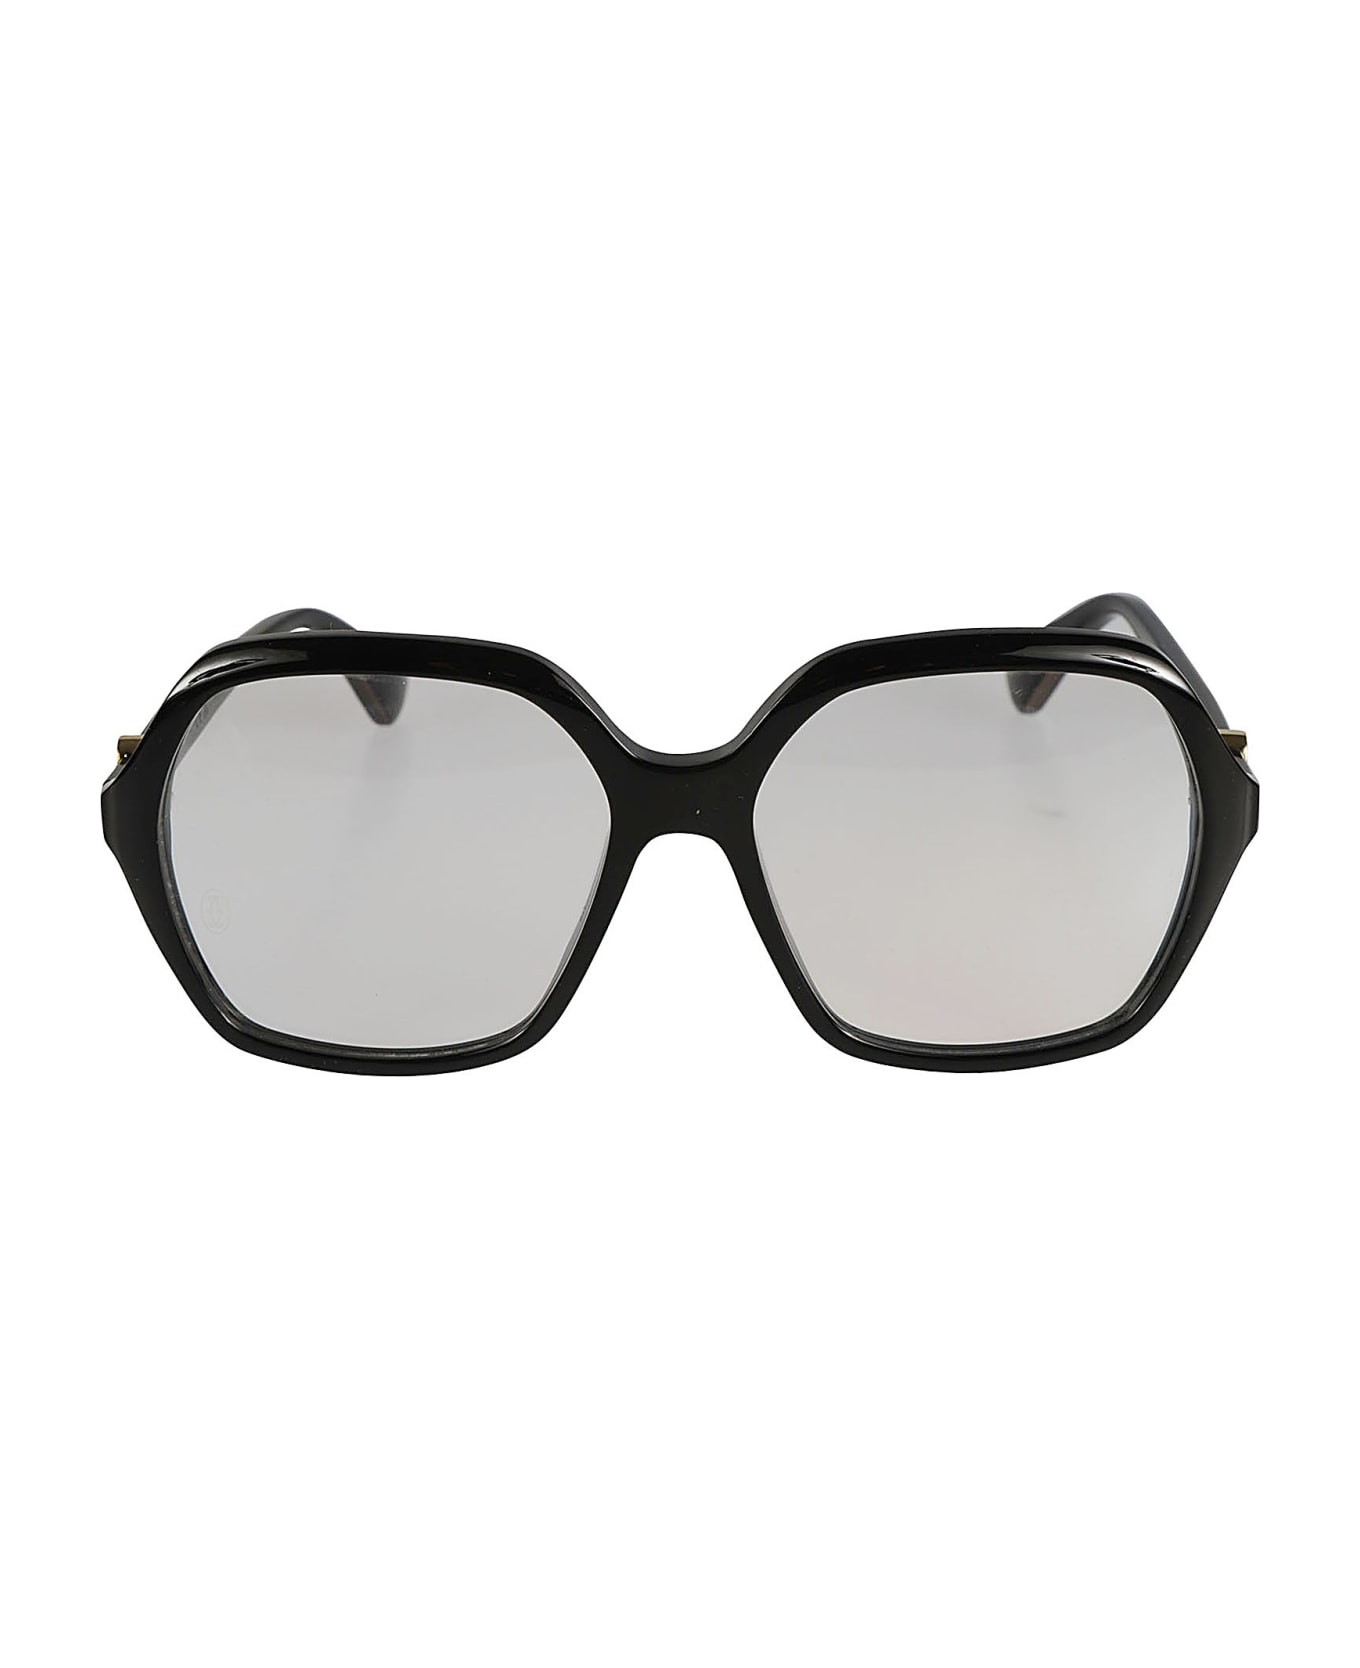 Cartier Eyewear Pentagon Rim Clear Lens Glasses - Black/Transparent